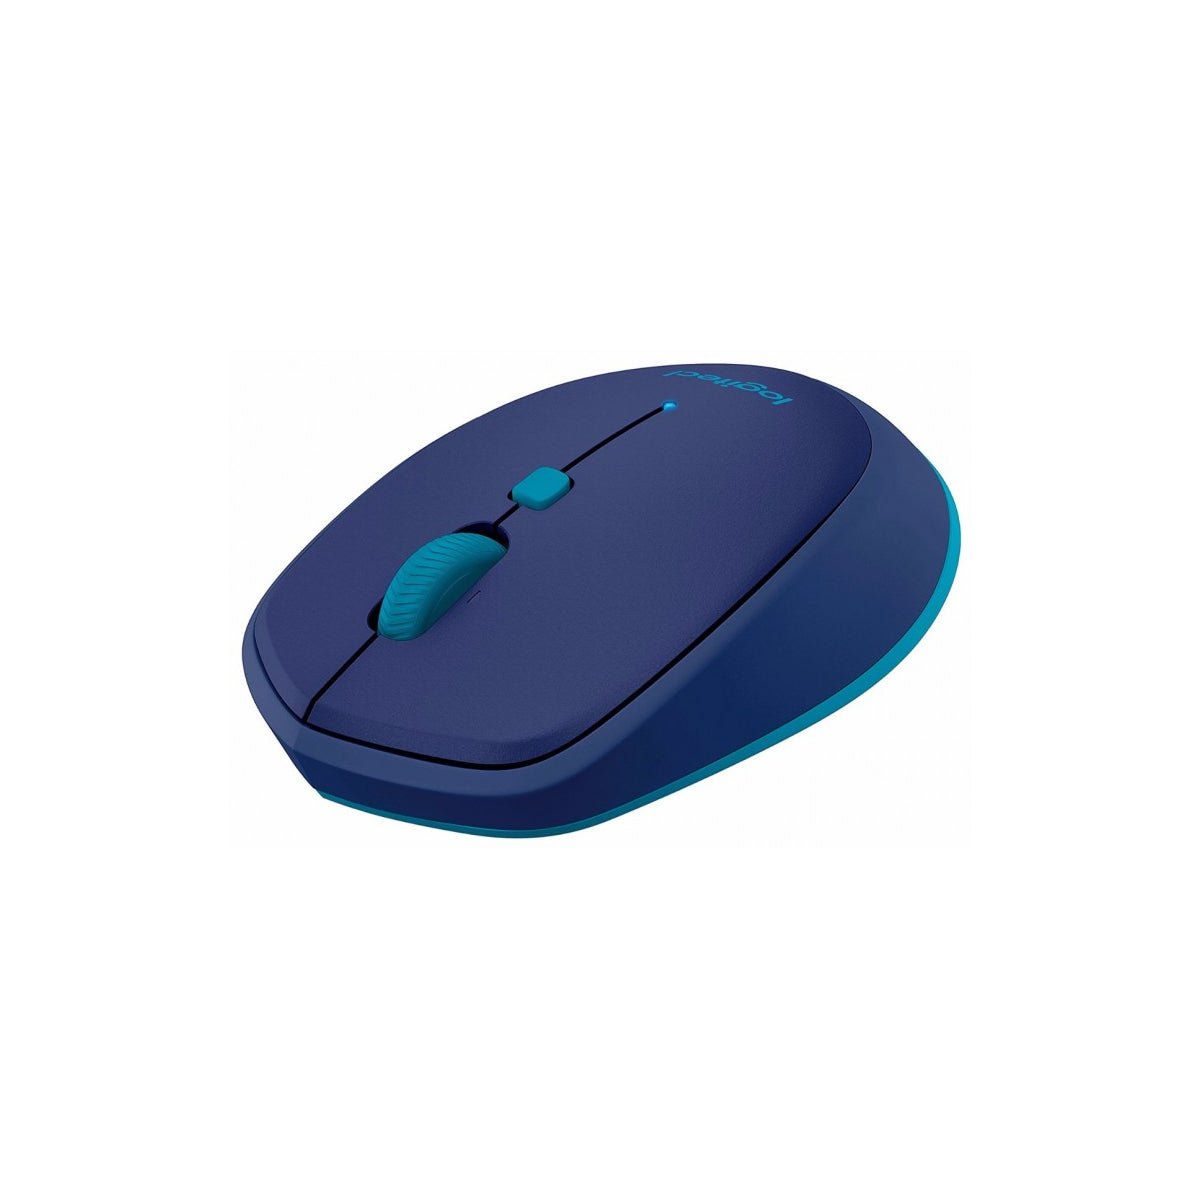 Logitech M535 Bluetooth Mouse - Blue - فأرة - Store 974 | ستور ٩٧٤